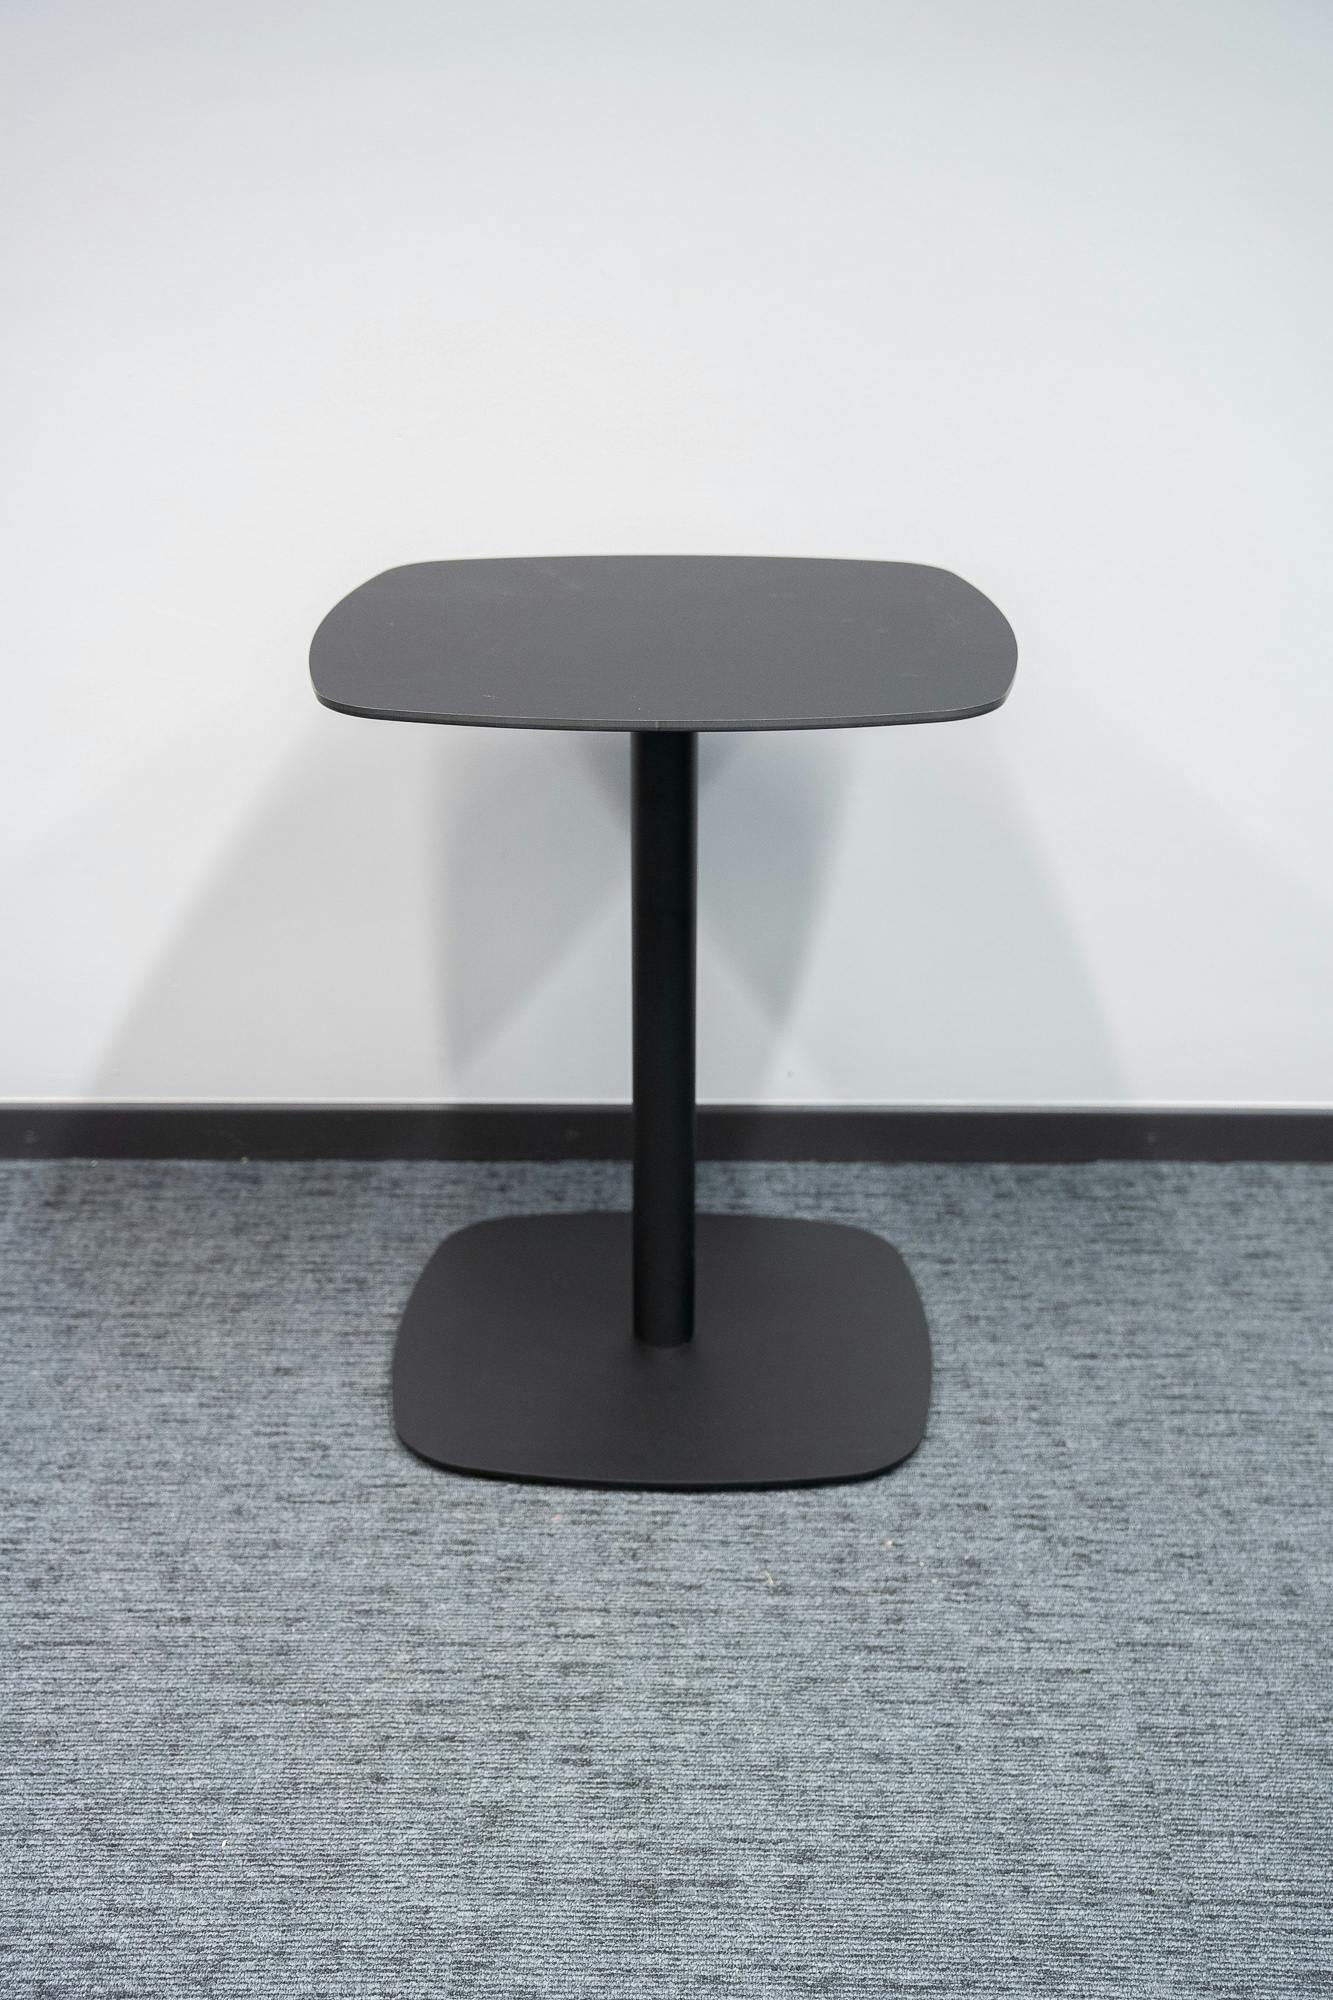 Black square iron table designed by Estudi Manel Molina - Relieve Furniture